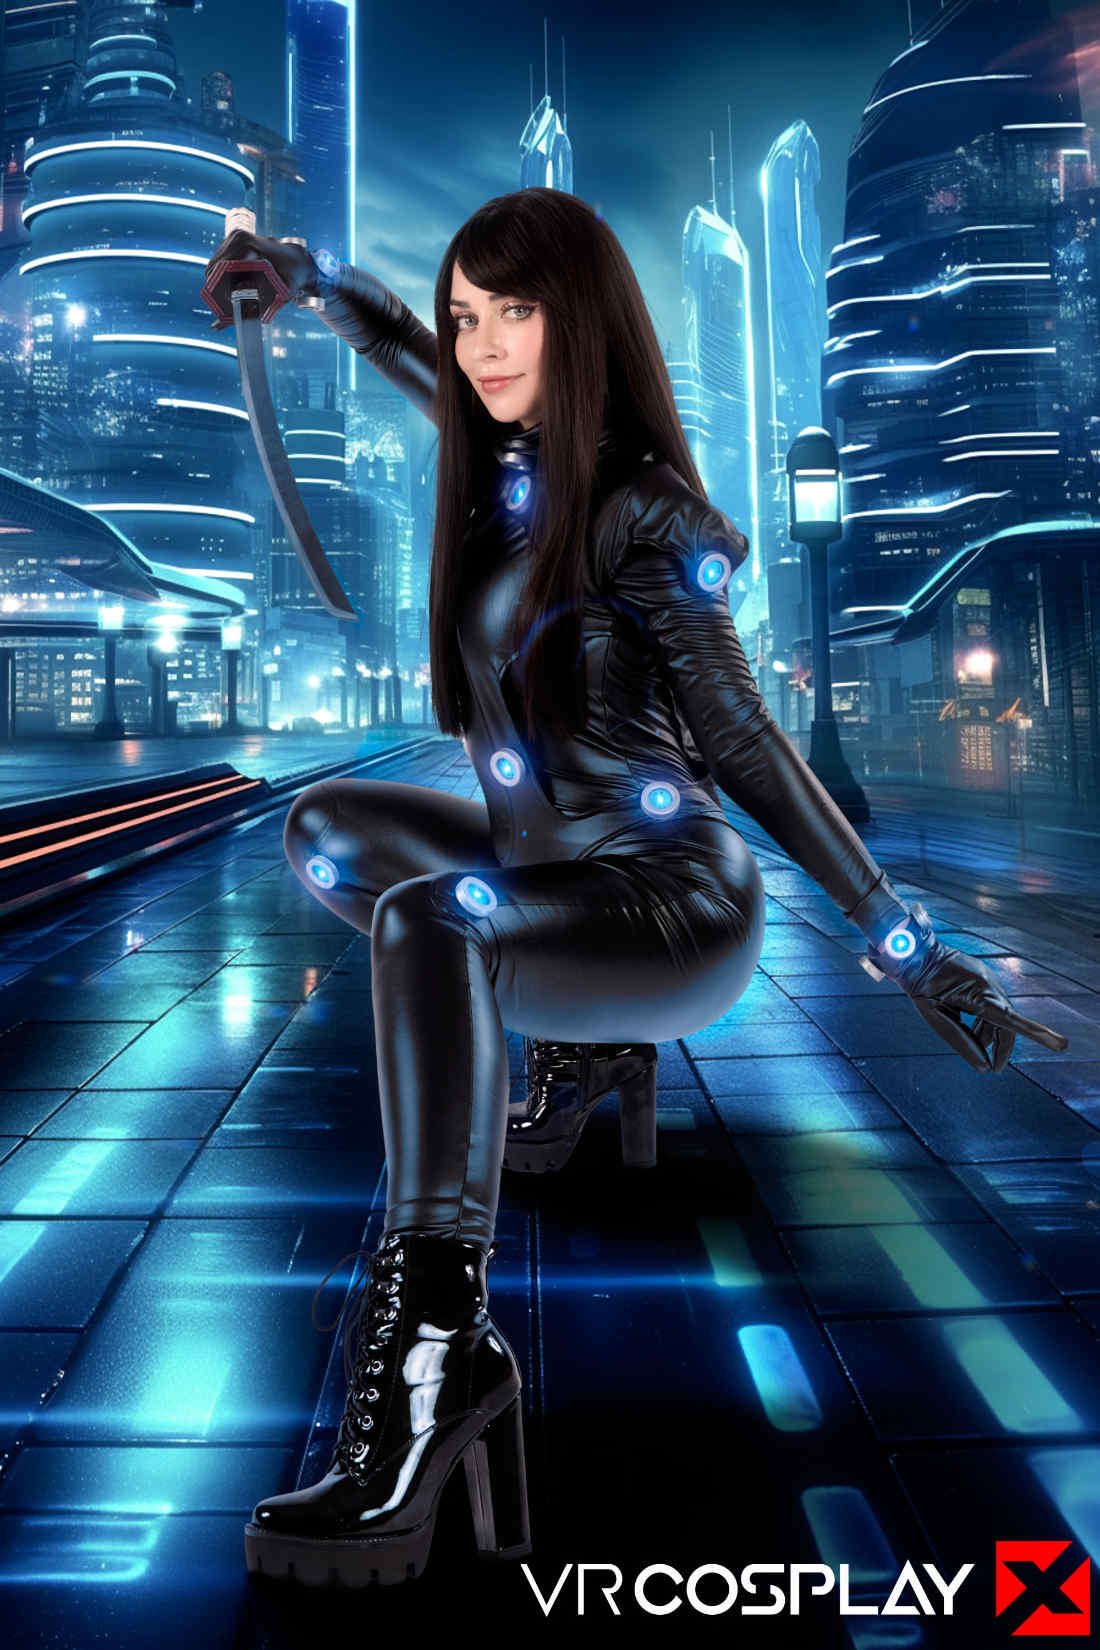 Jewelz Blu VR Cosplay X Gantz costume promo poster